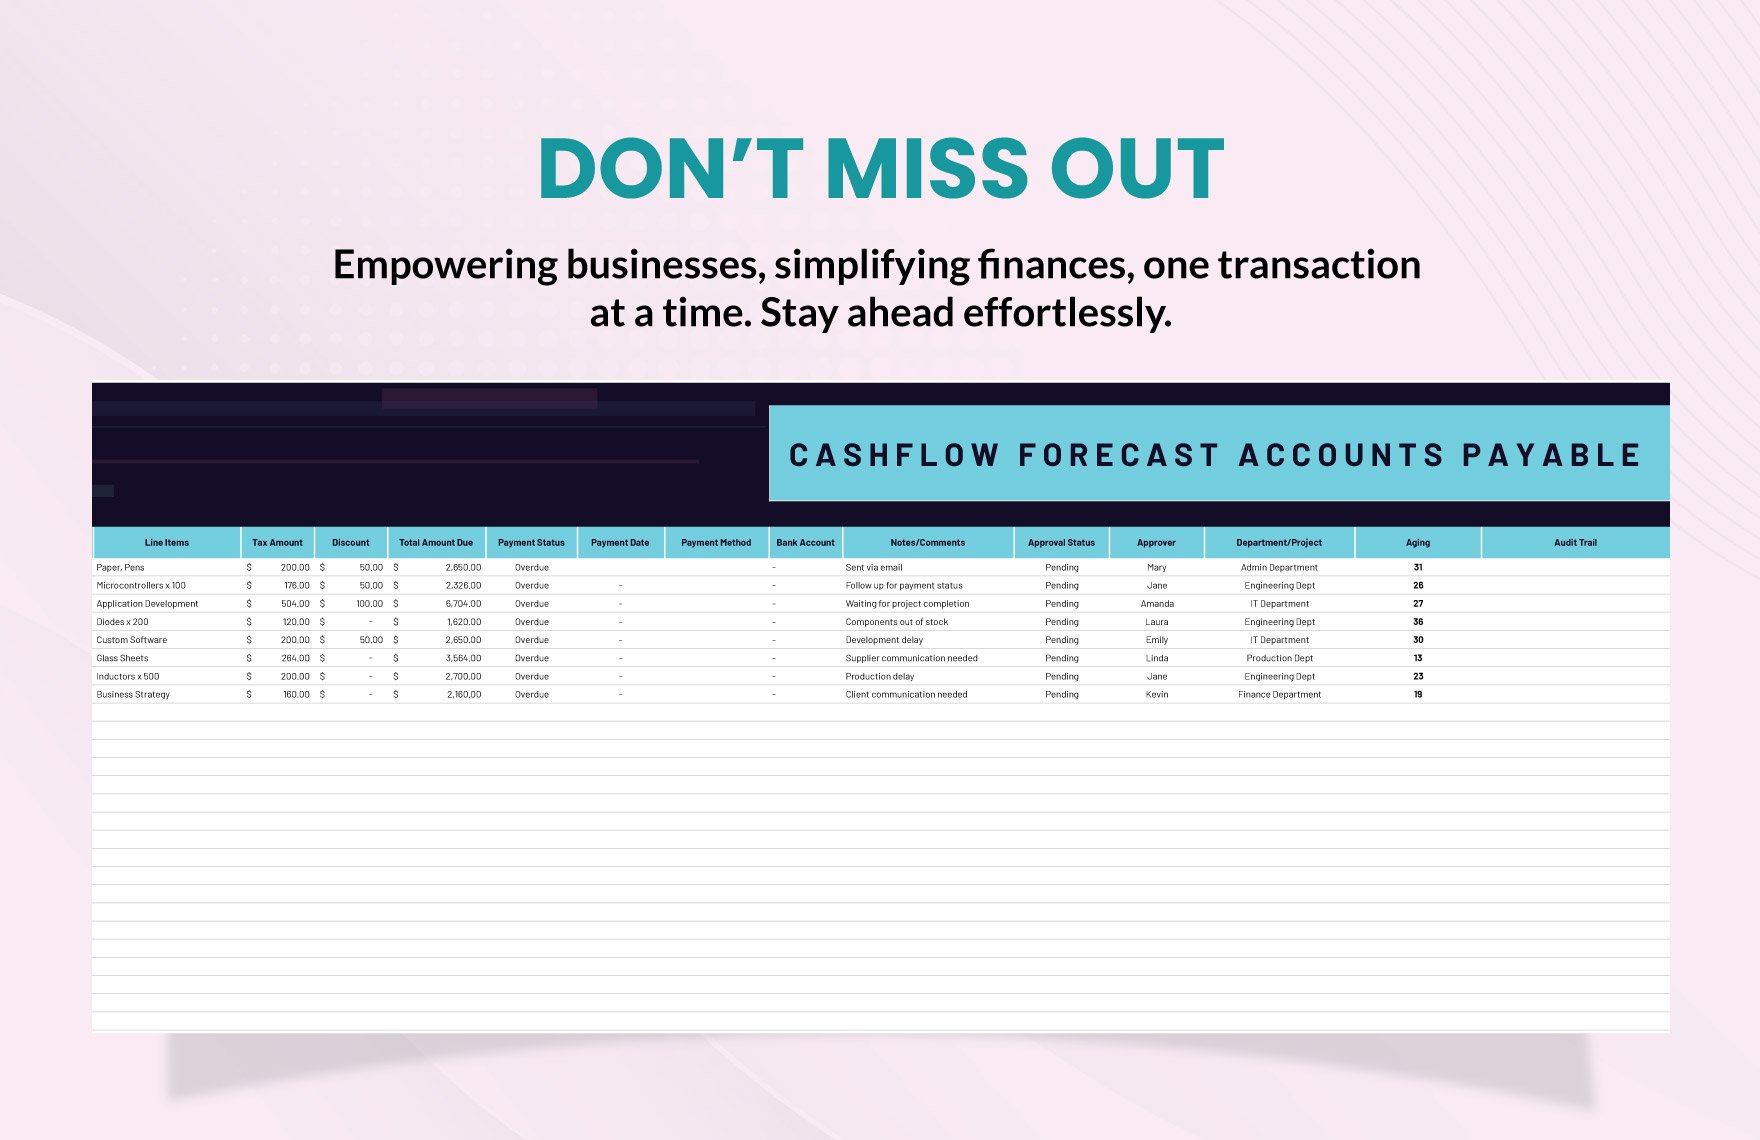 Cashflow Forecast Accounts Payable Template